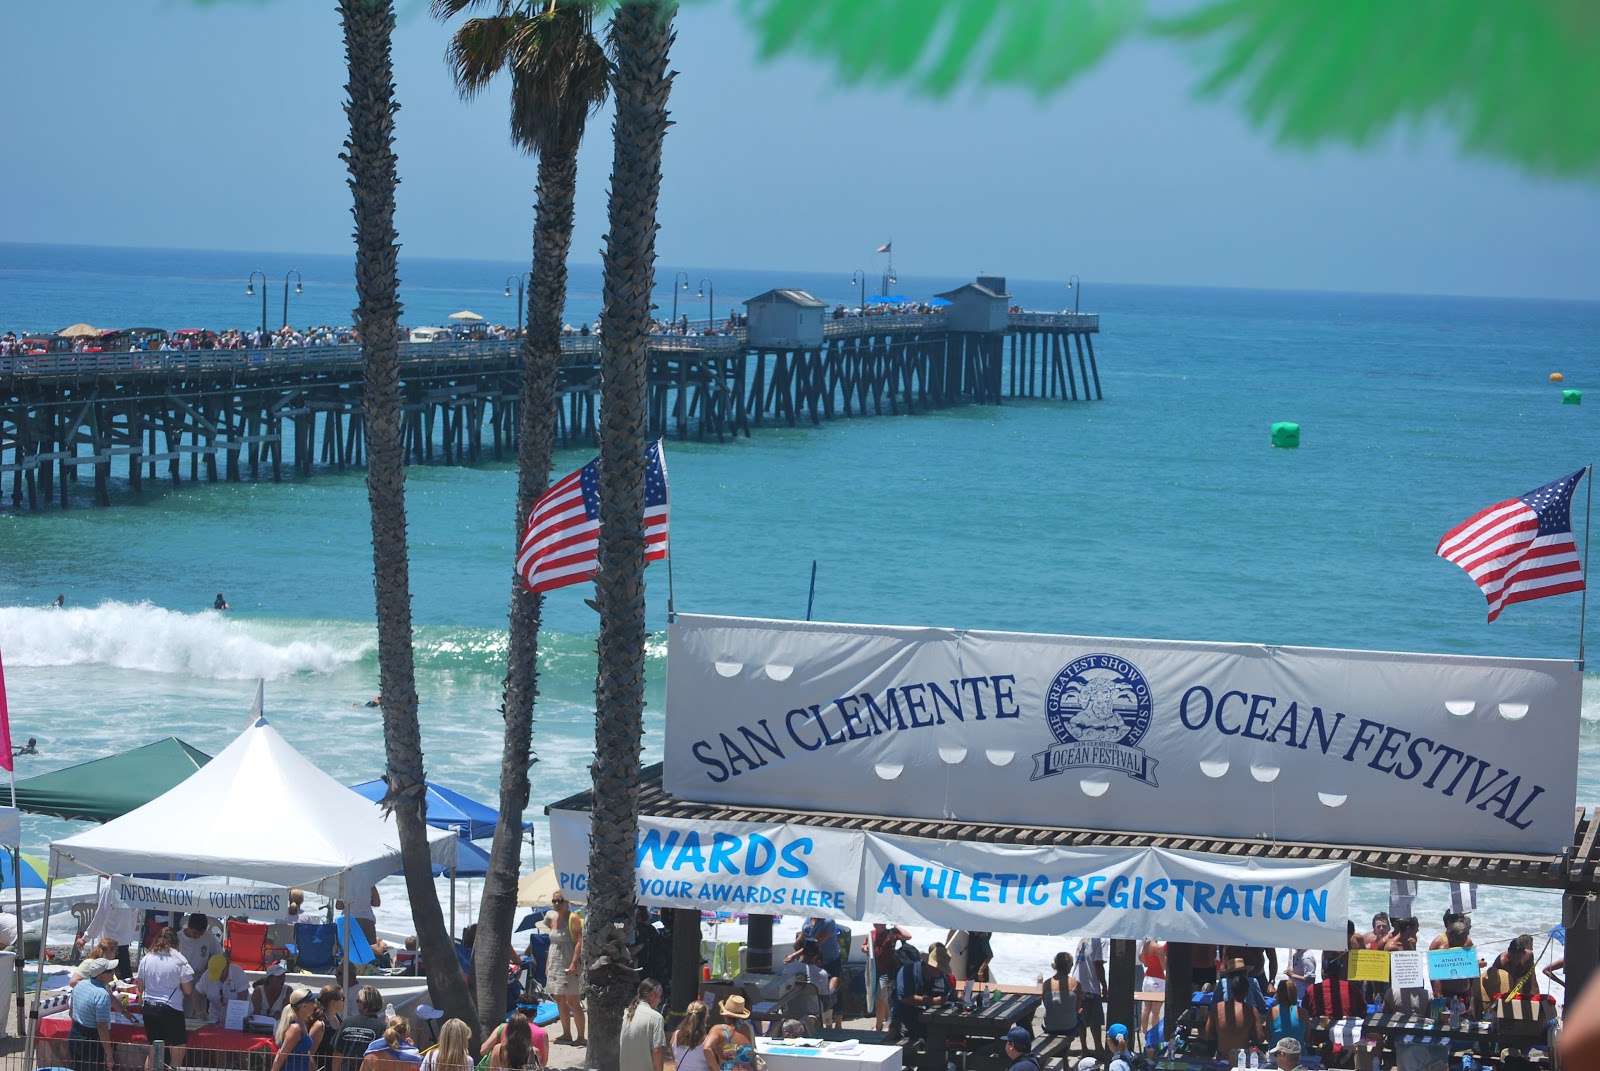 San Clemente's 38th Annual Ocean Festival, July 19 & 20, 2014!